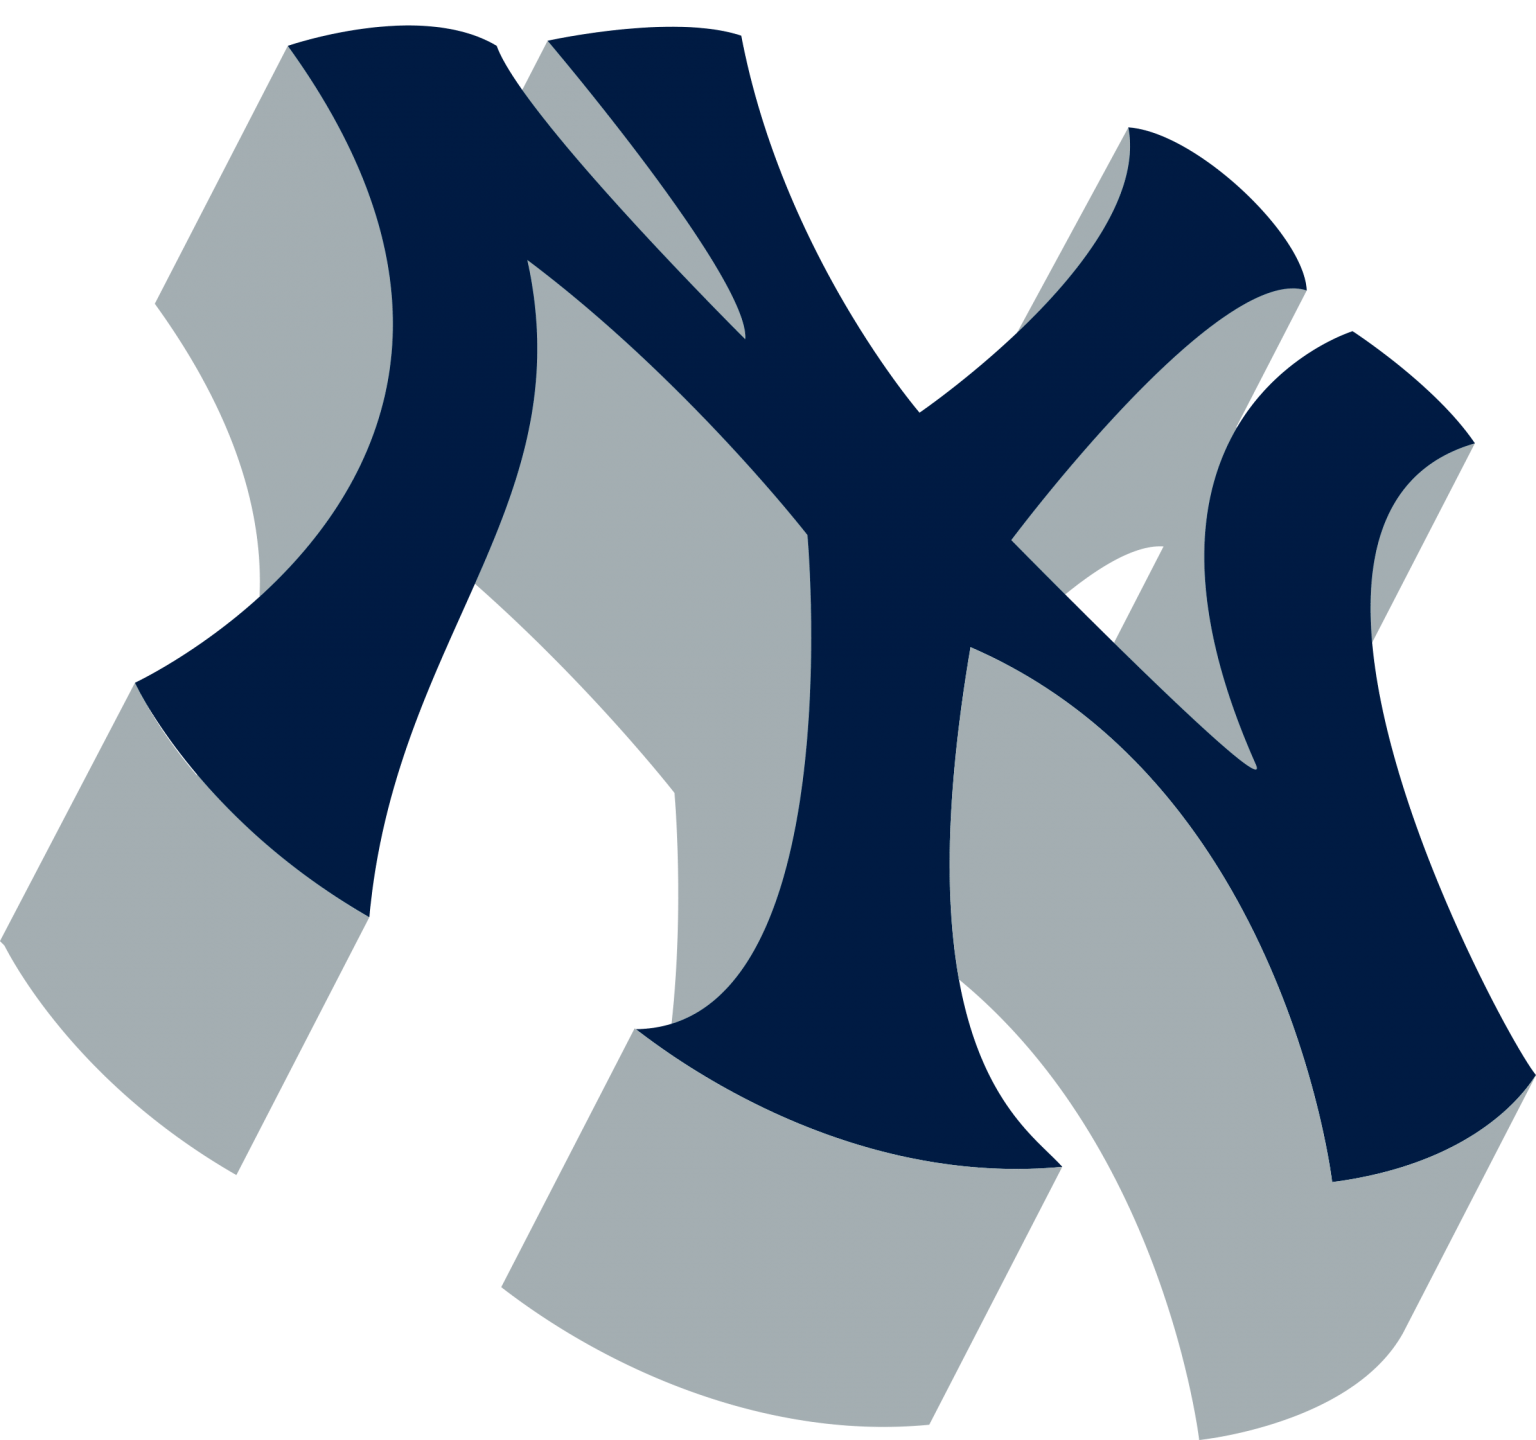 MLB New York Yankees SVG, SVG Files For Silhouette, New York Yankees ...